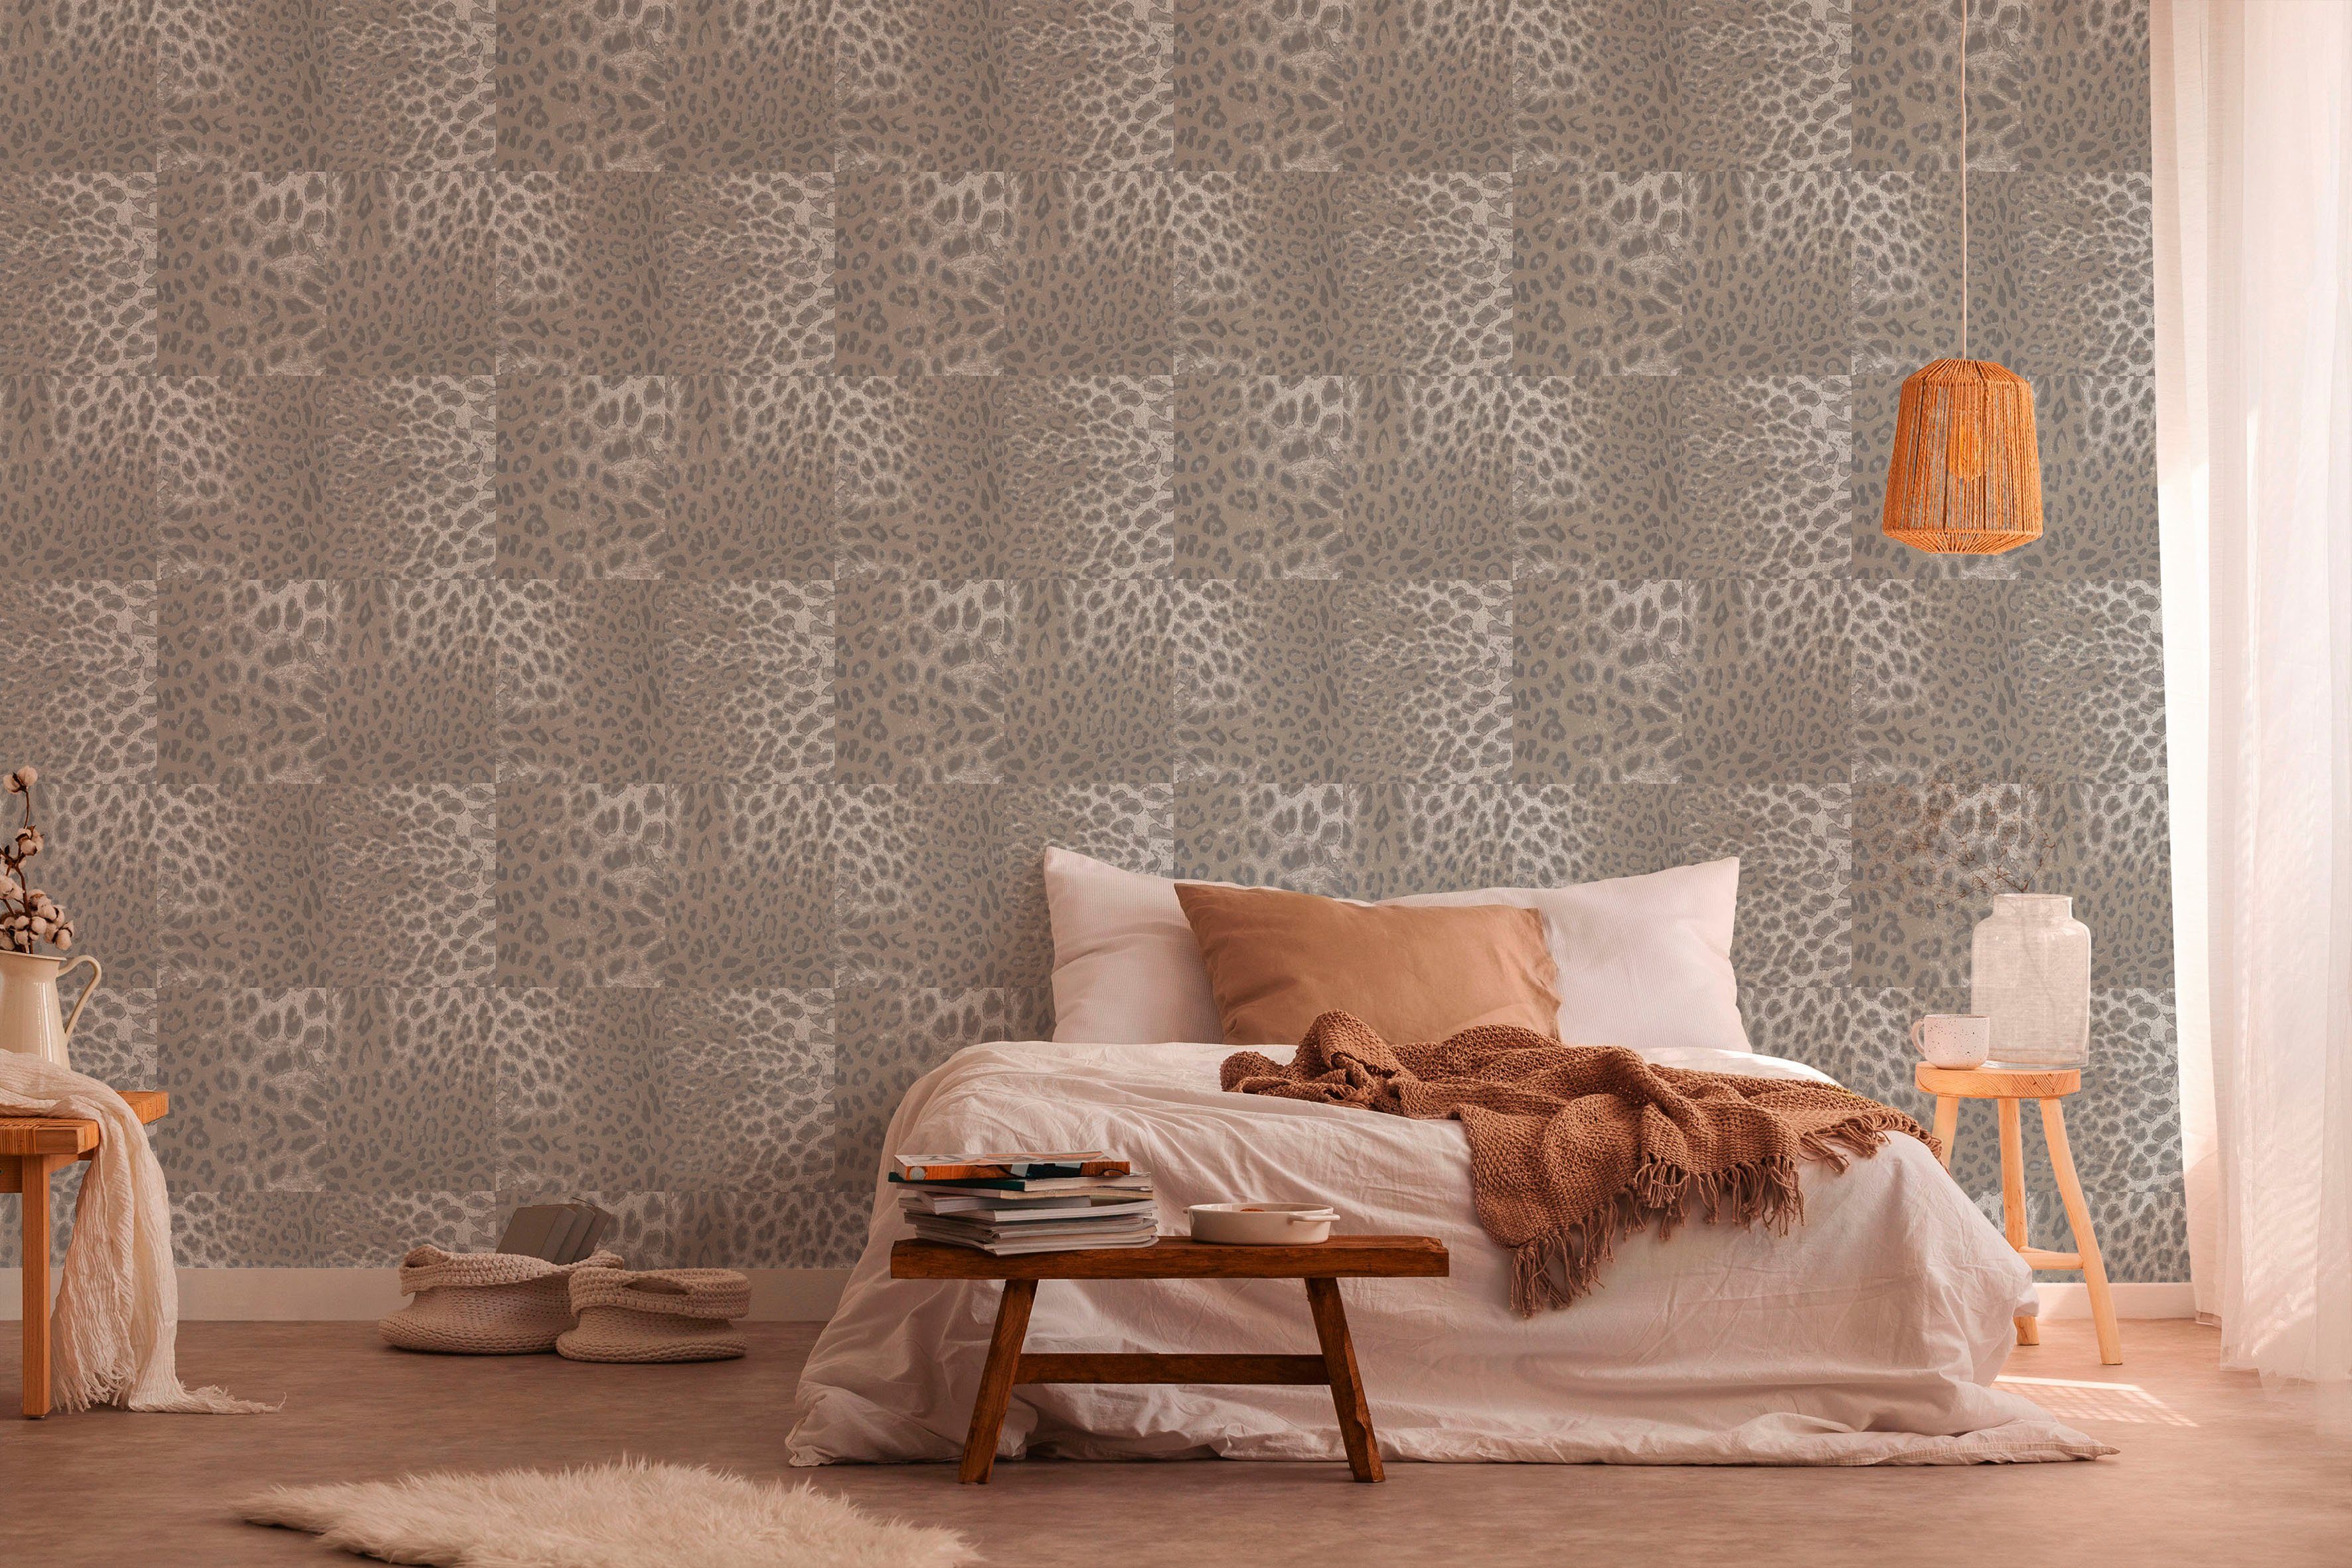 living walls Leopardenmuster Desert Tapete print, Vliestapete Fellimitat, grau/weiß/braun animal strukturiert, Lodge, gemustert